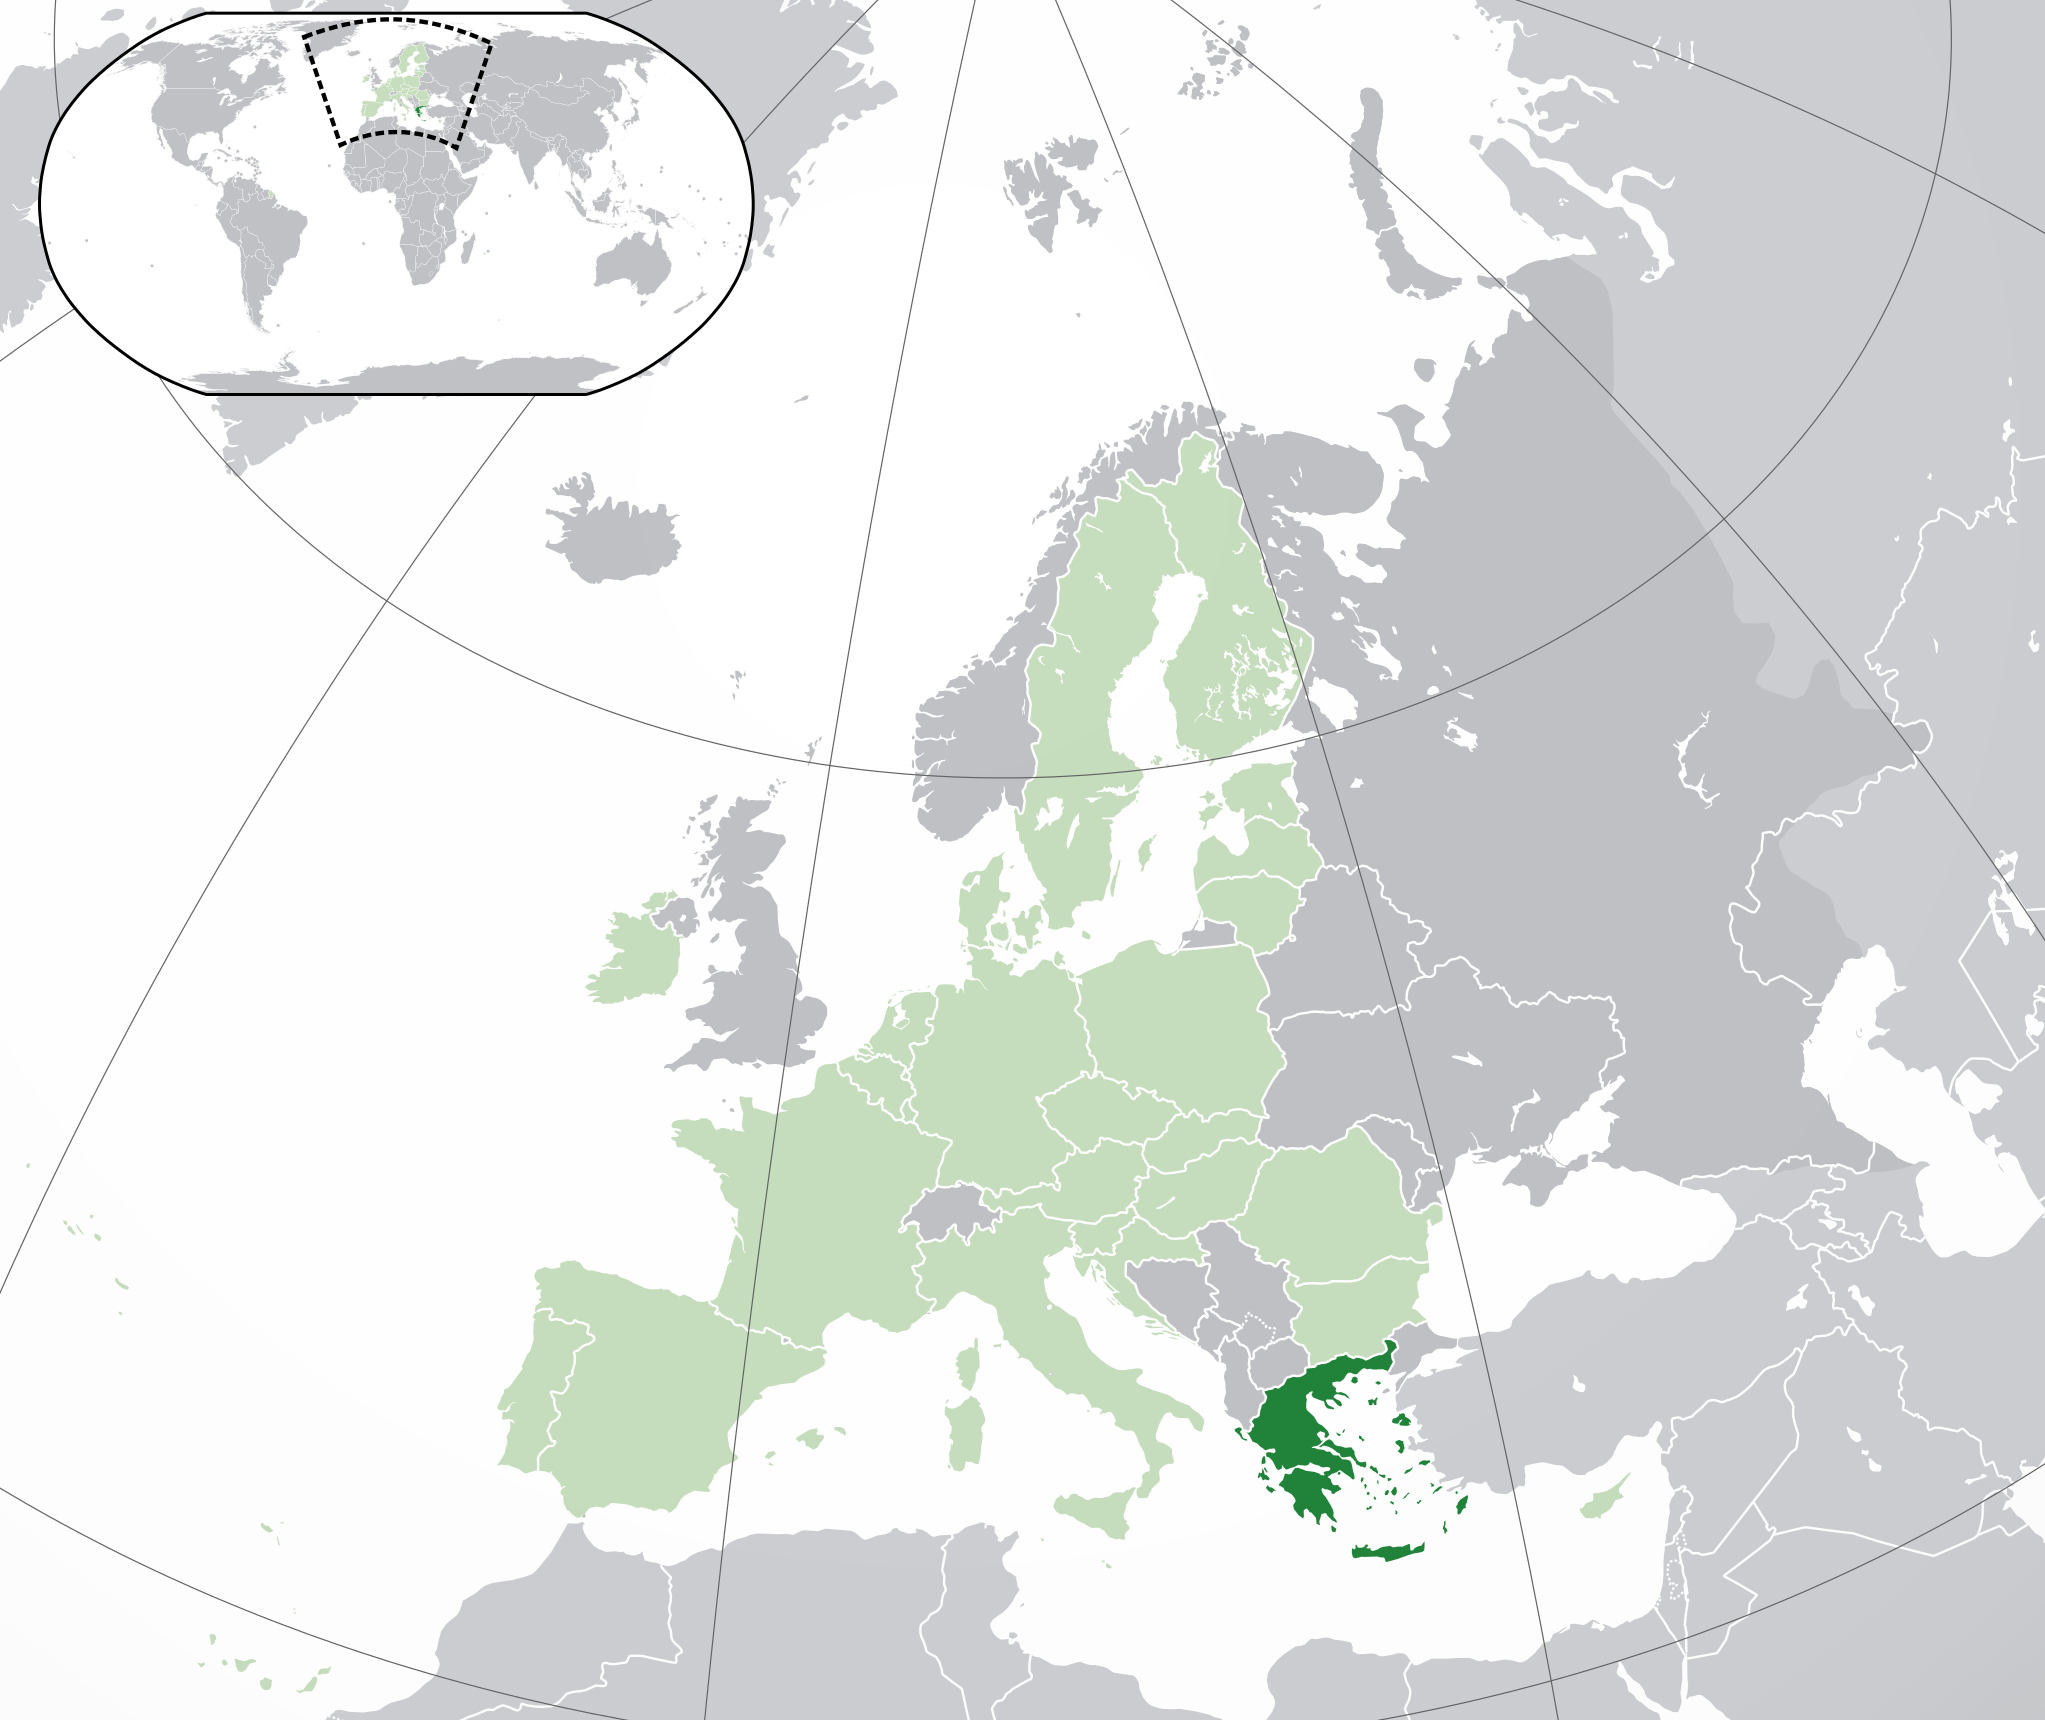 Location of Hellenic Republic